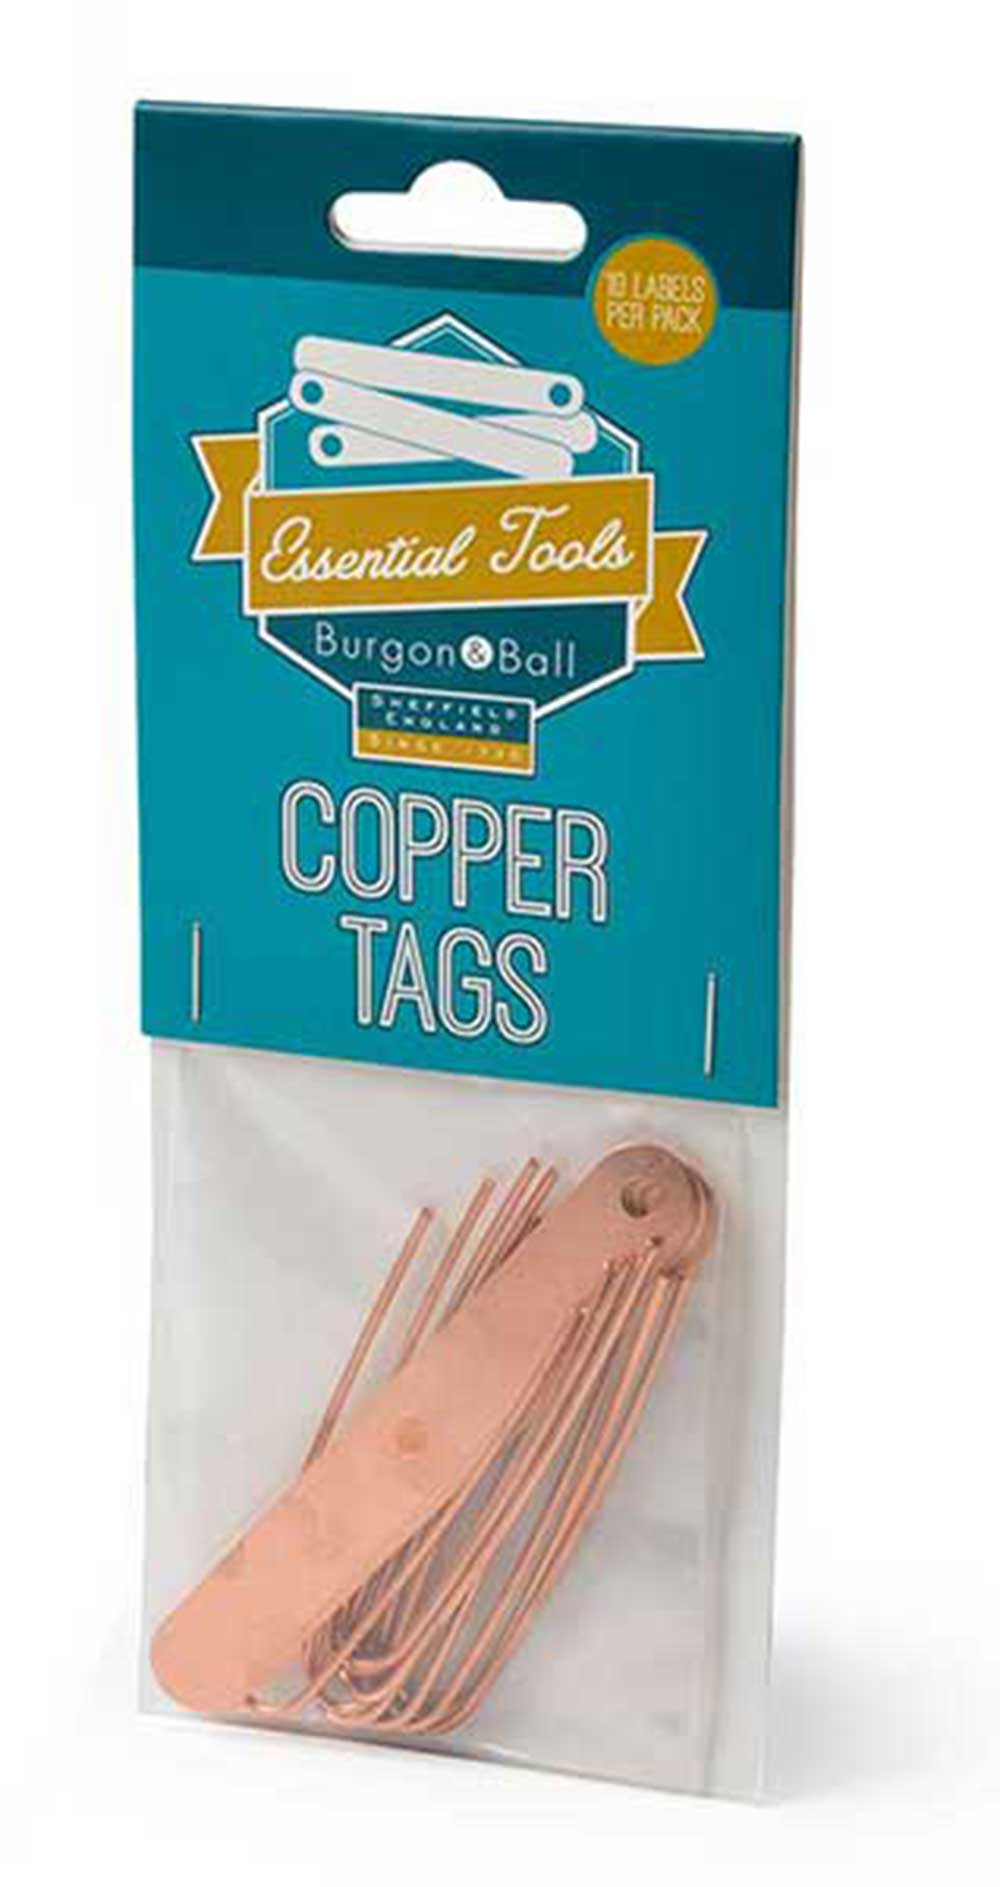 Copper Tags